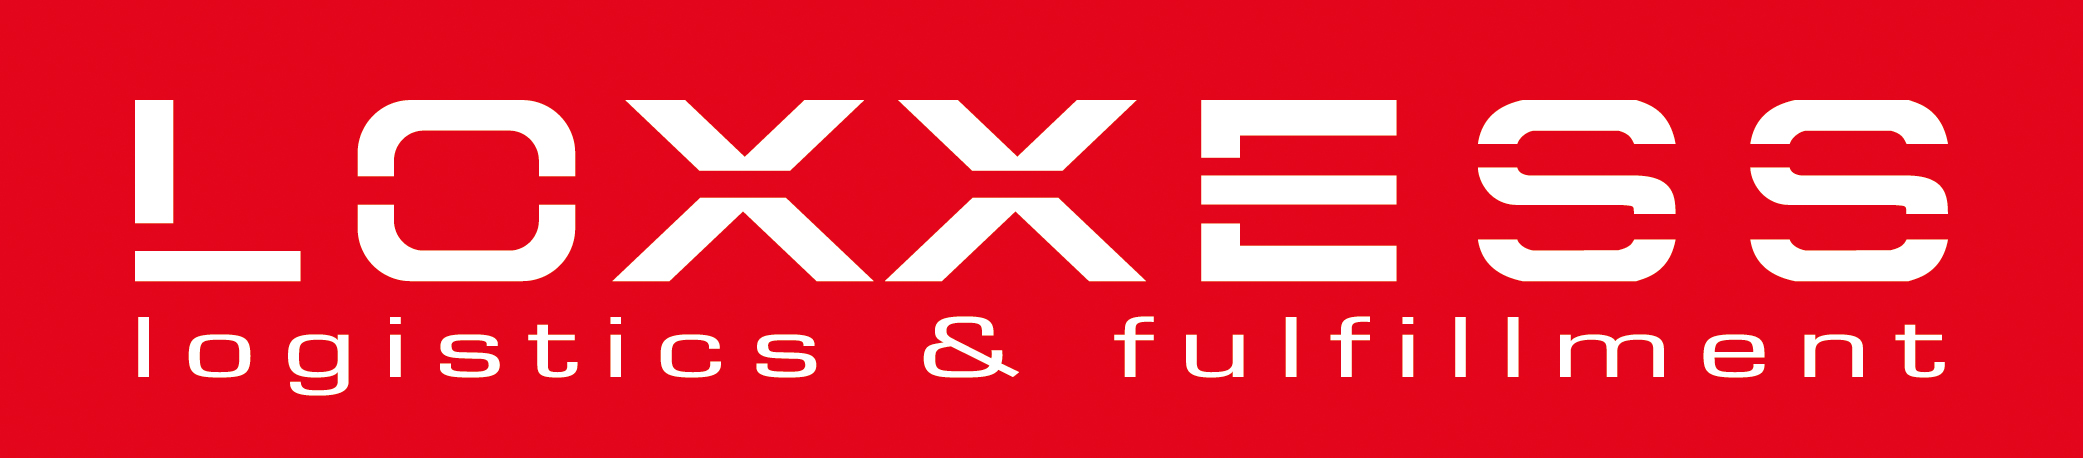 LOXXESS IT Services GmbH 